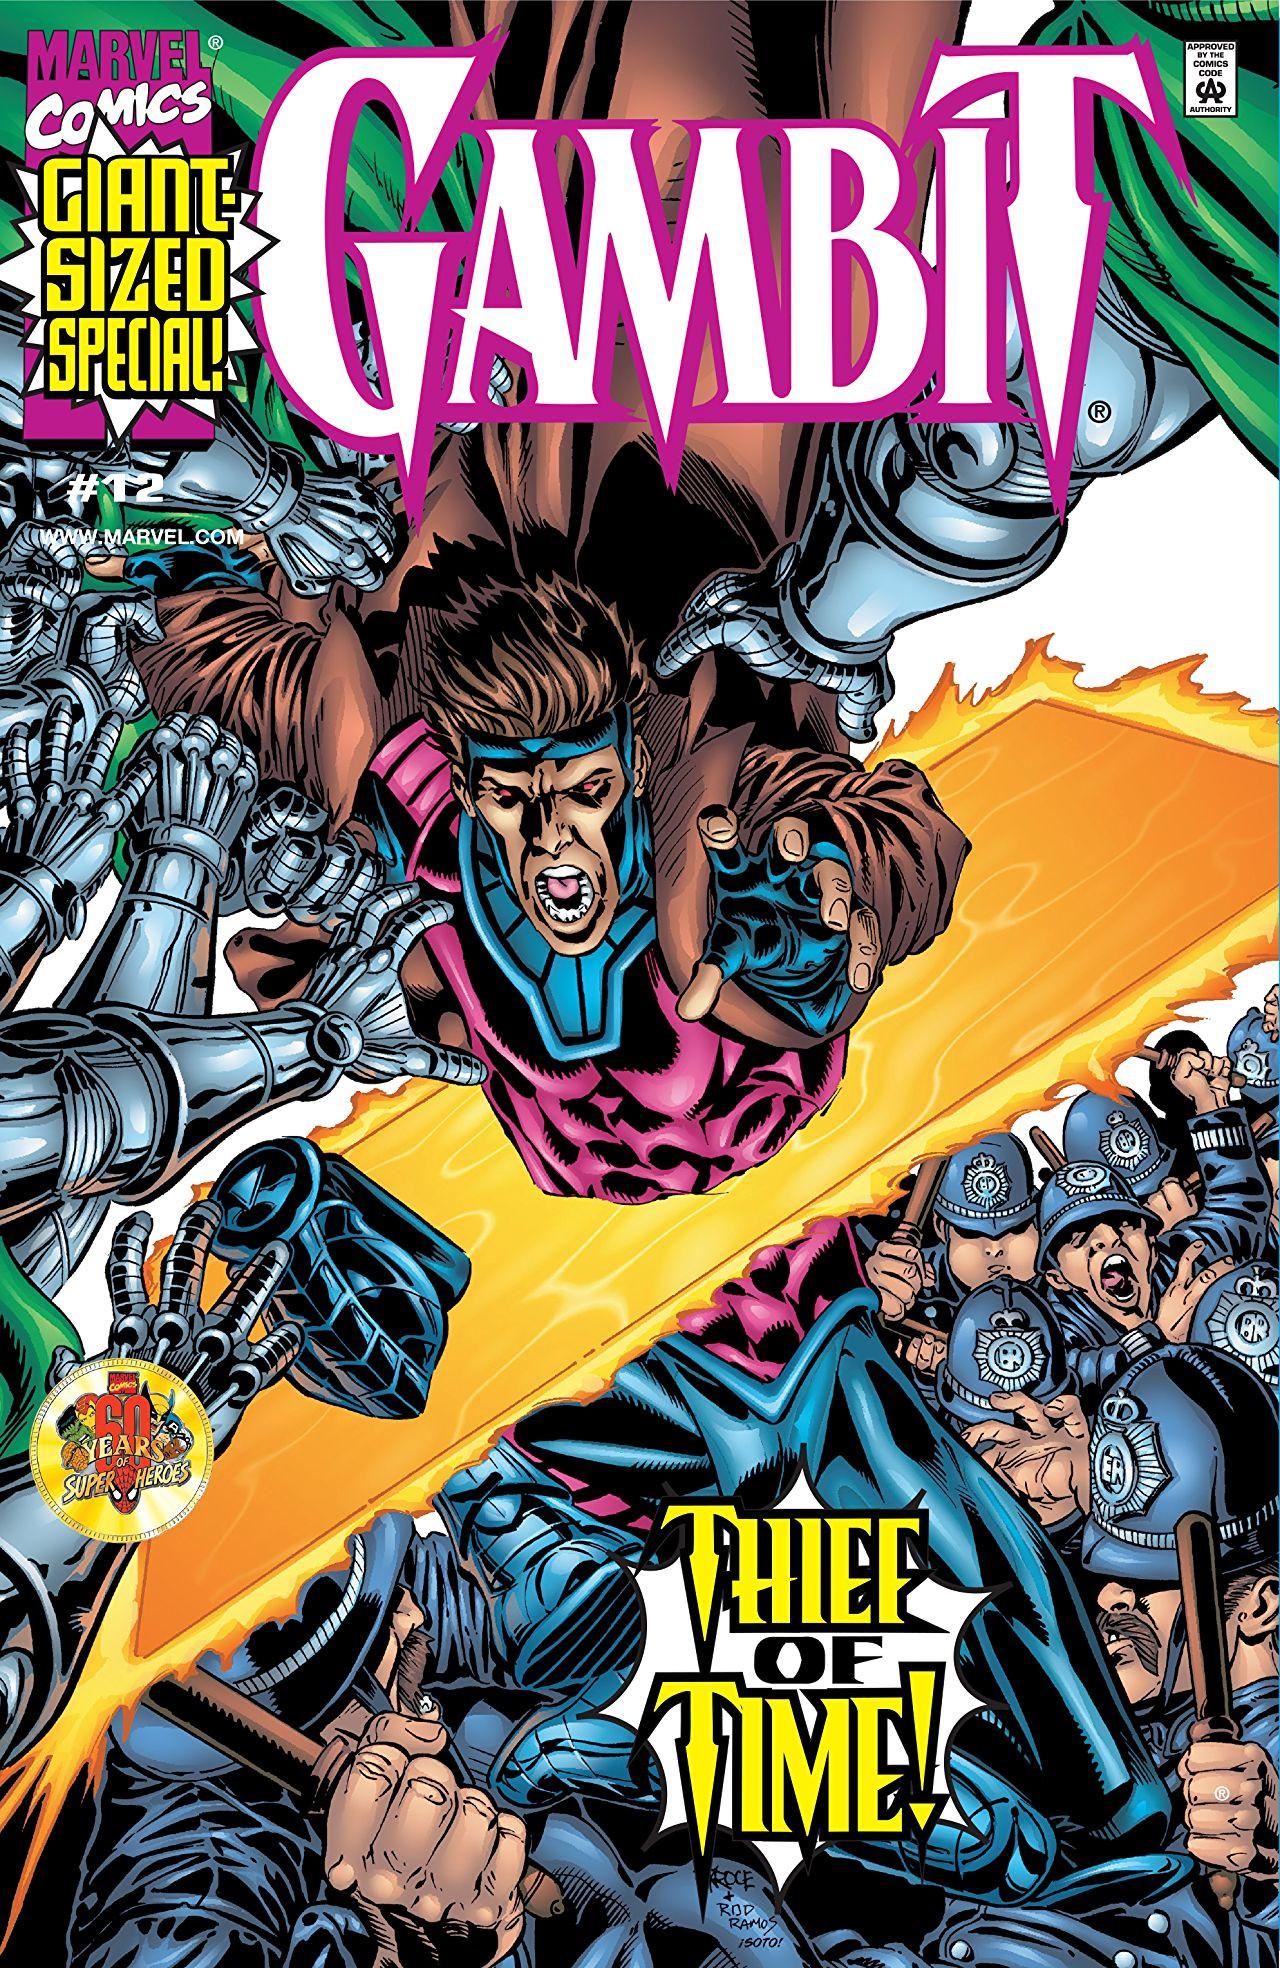  Gambit Vol 3 12 Marvel Comics Database